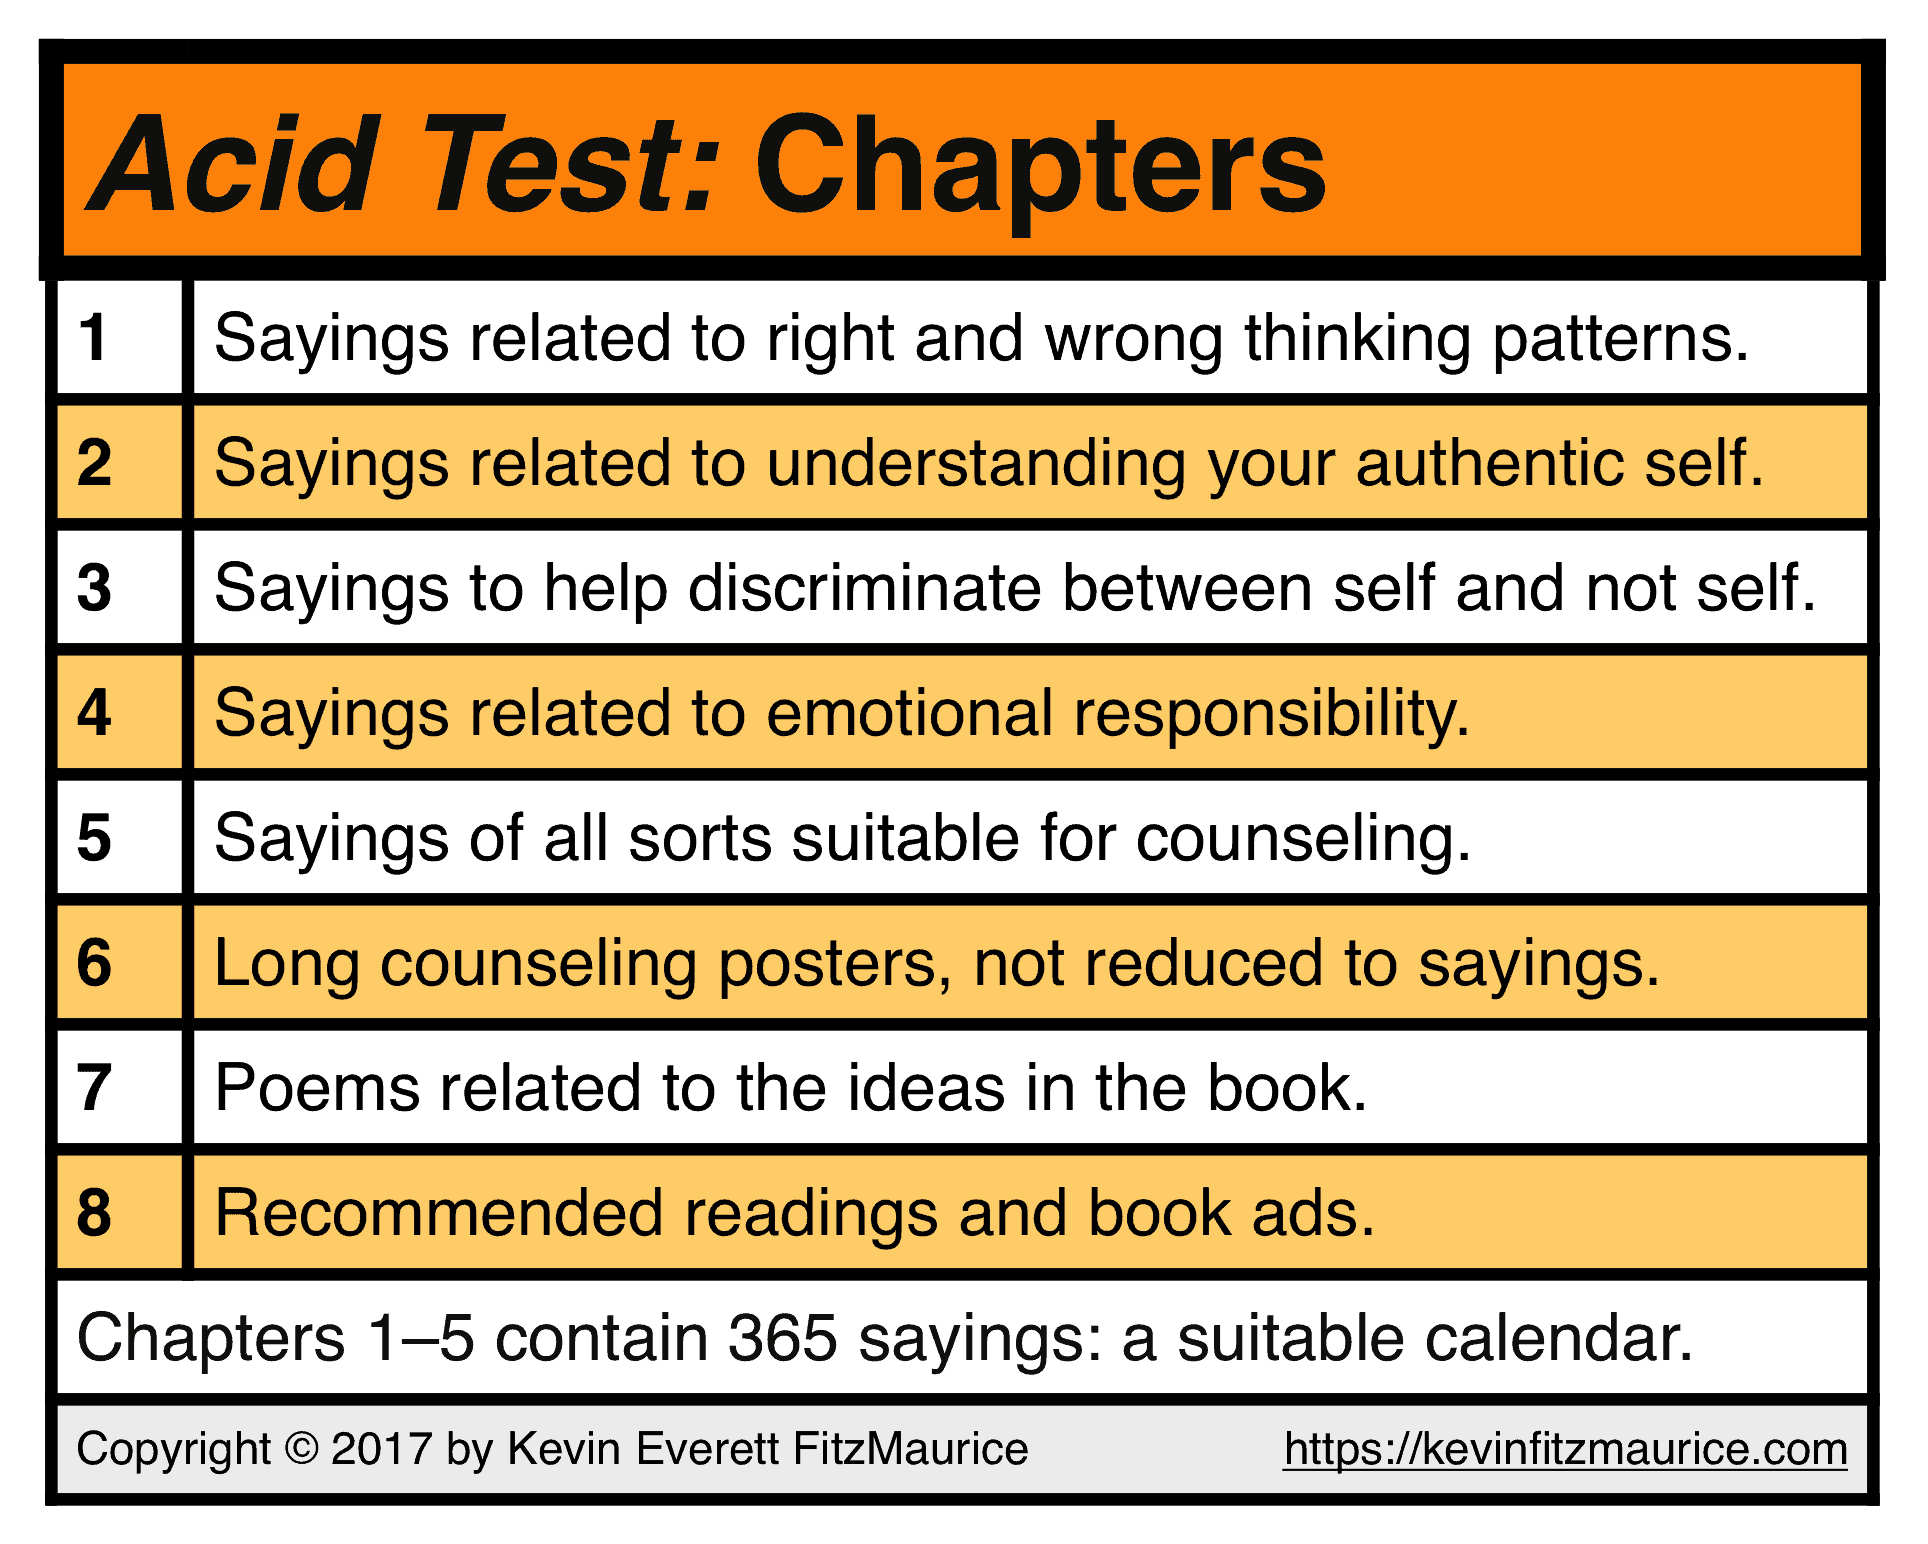 ACID TEST Chapter Contents